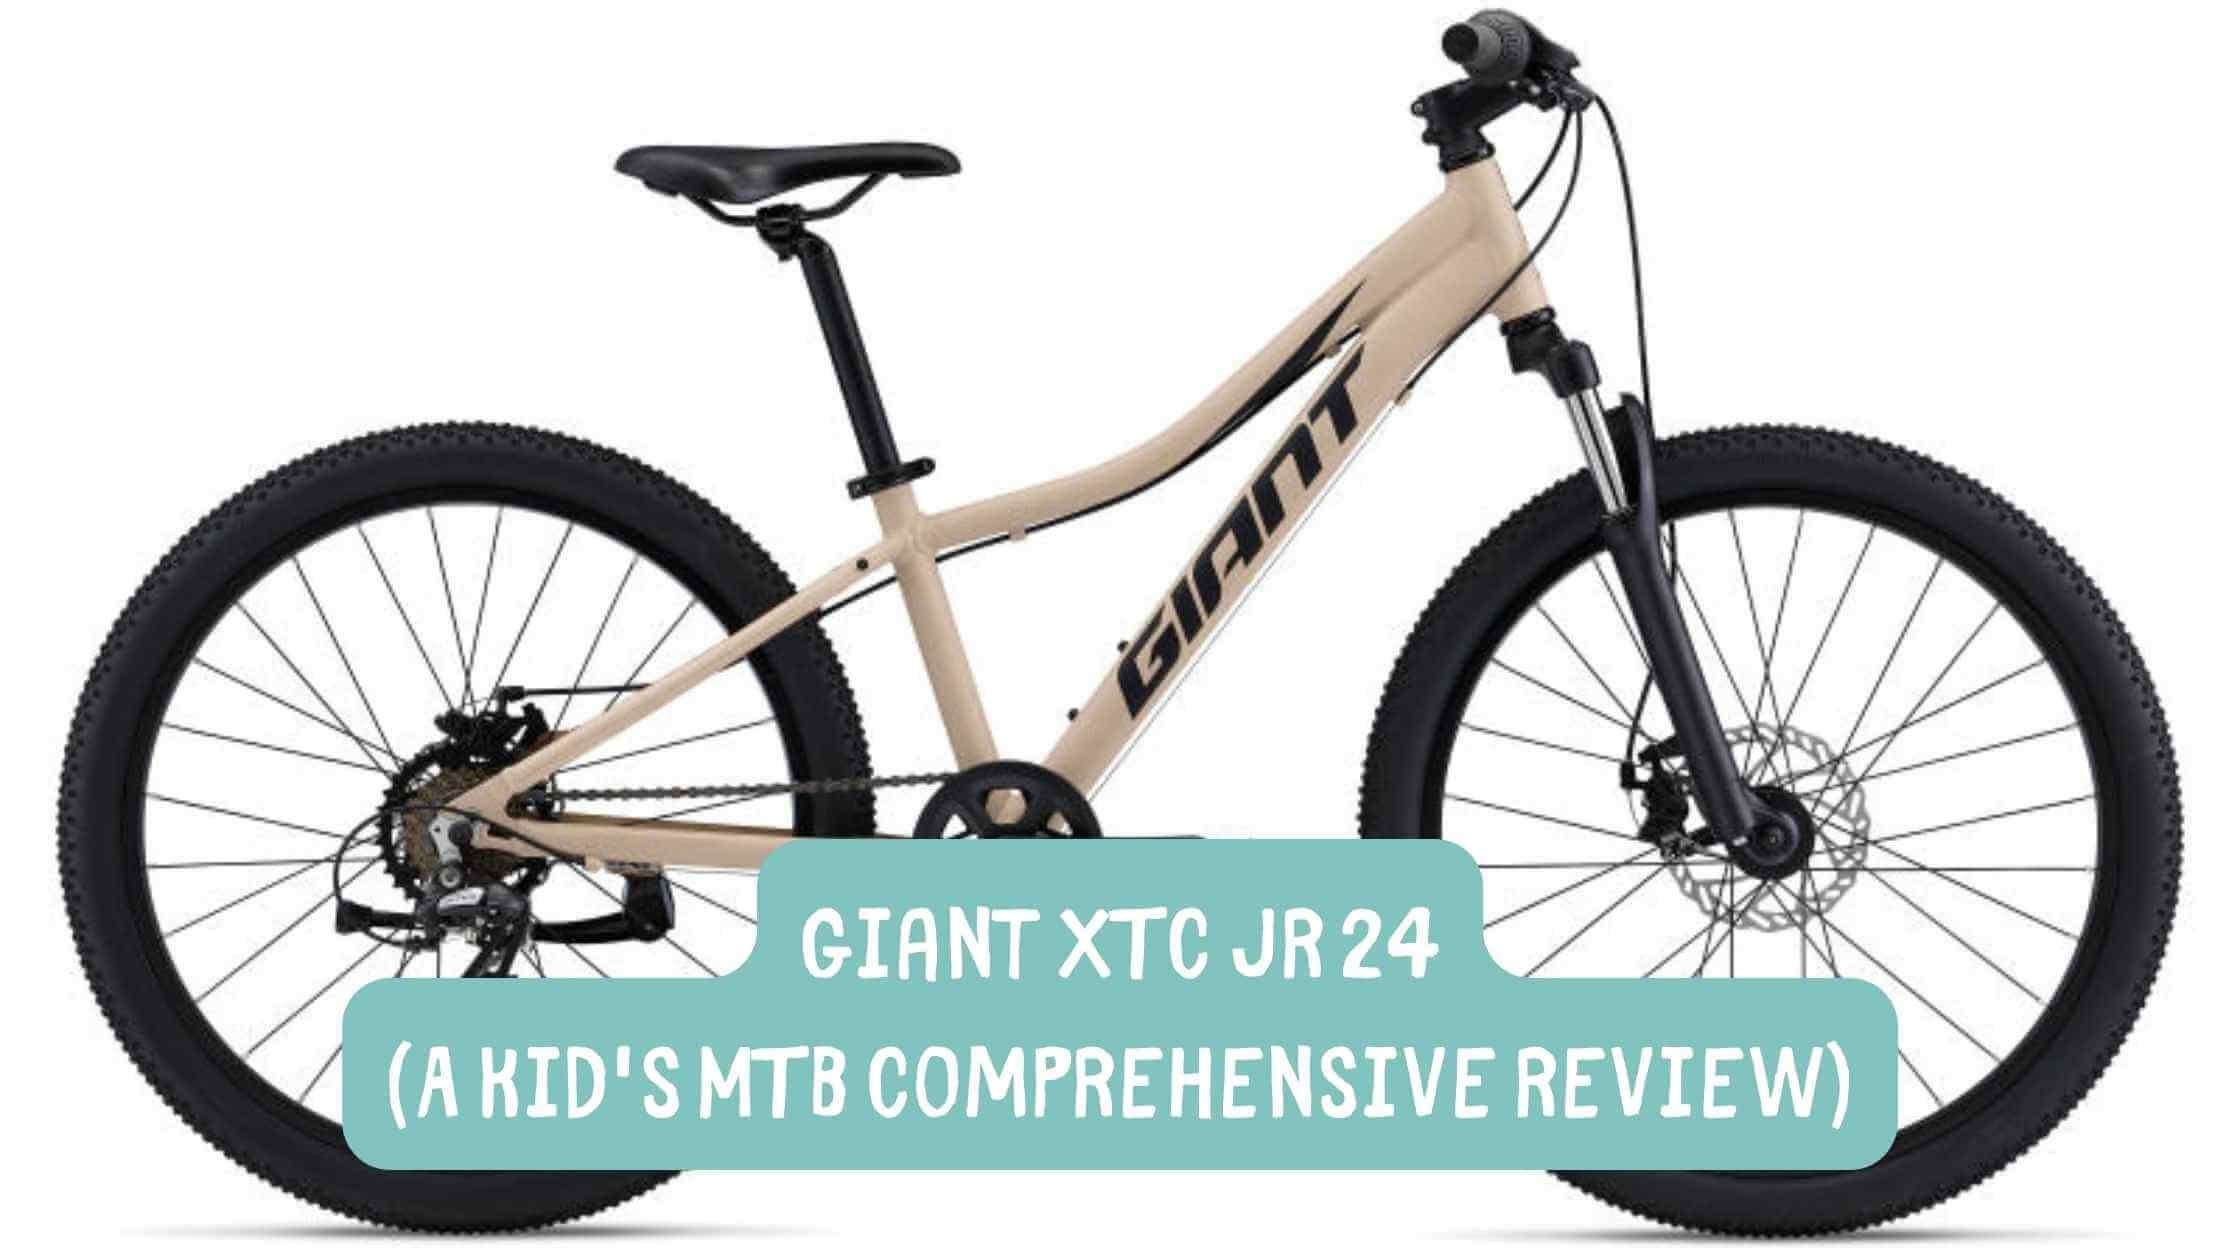 Giant XTC Jr 24